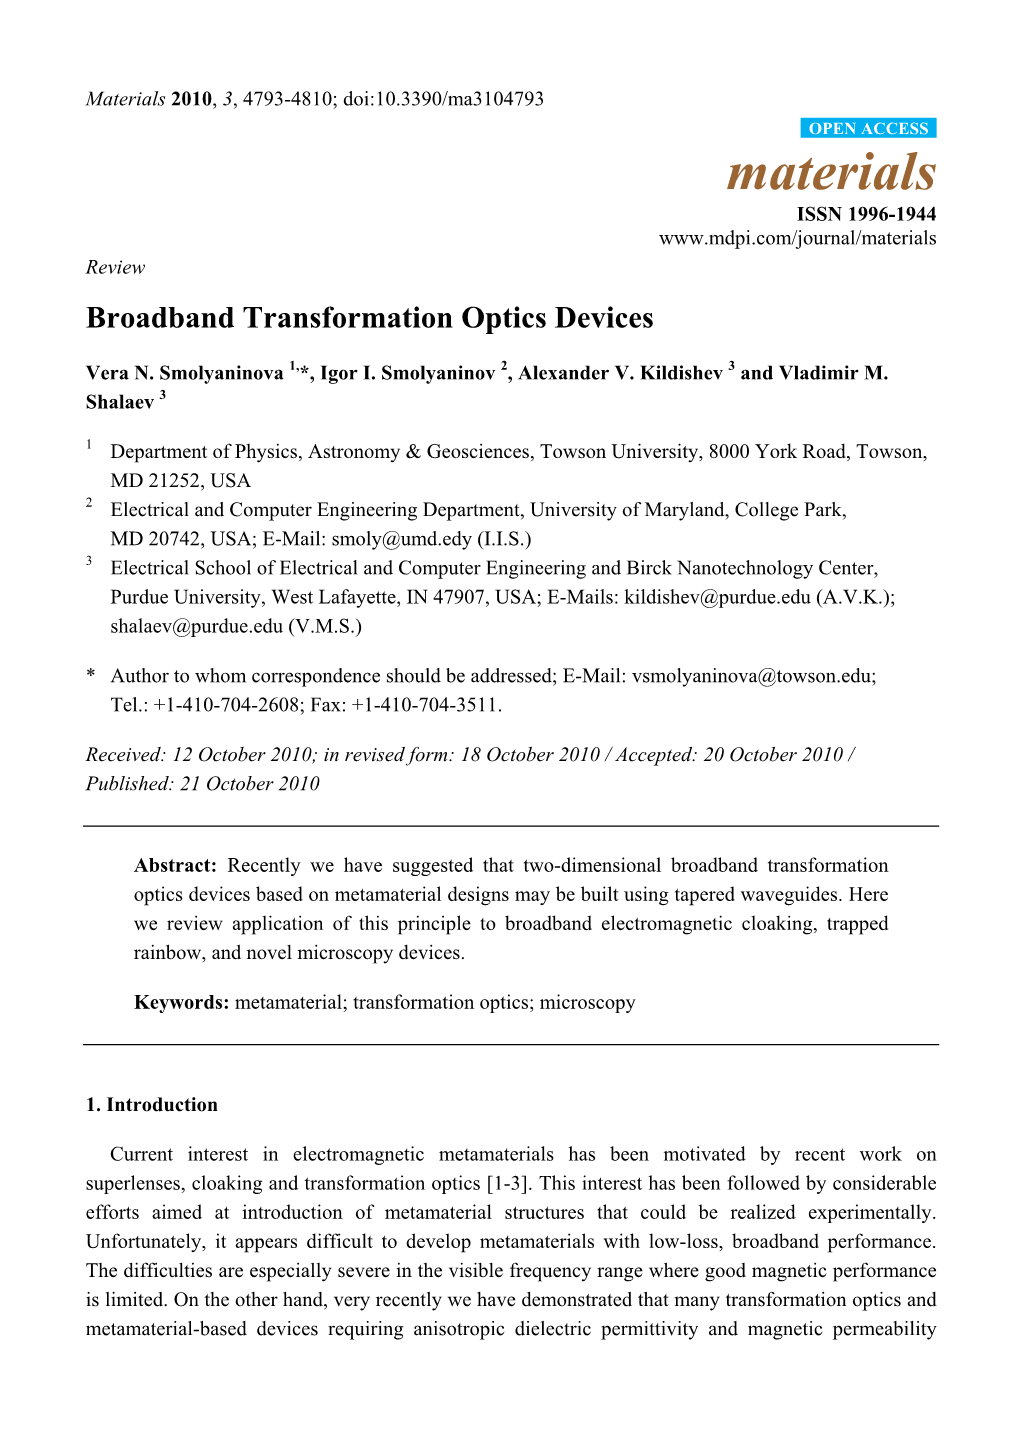 Broadband Transformation Optics Devices